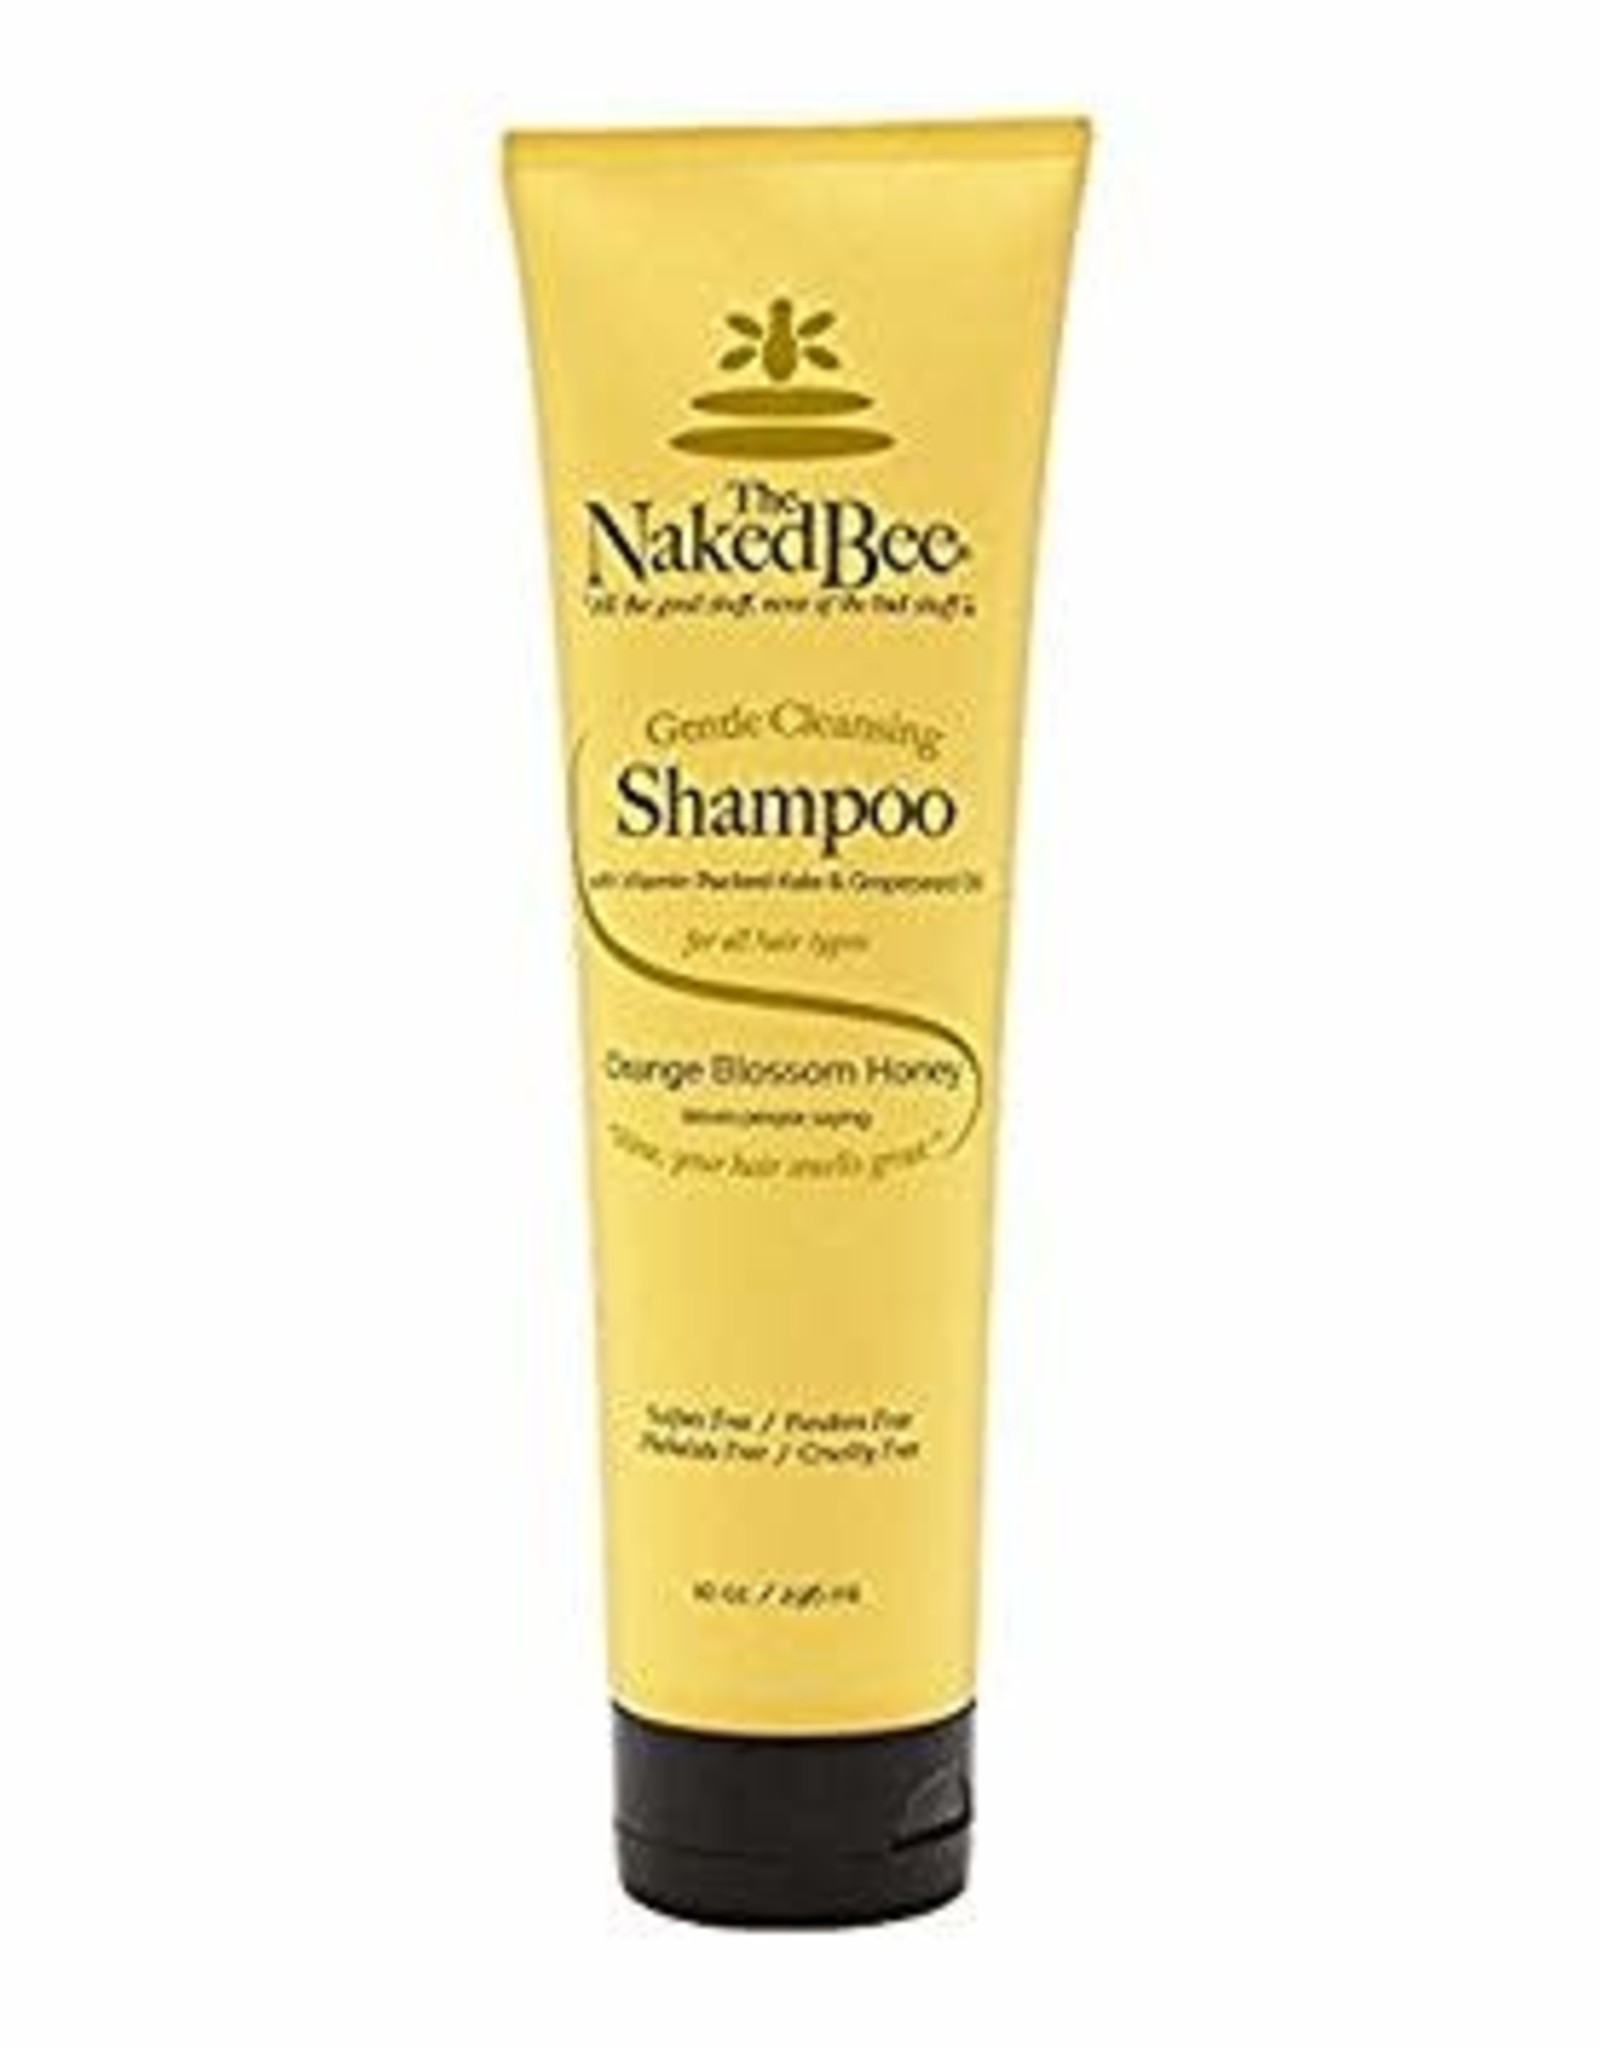 Naked Bee Shampoo 10oz Orange Blossom Honey